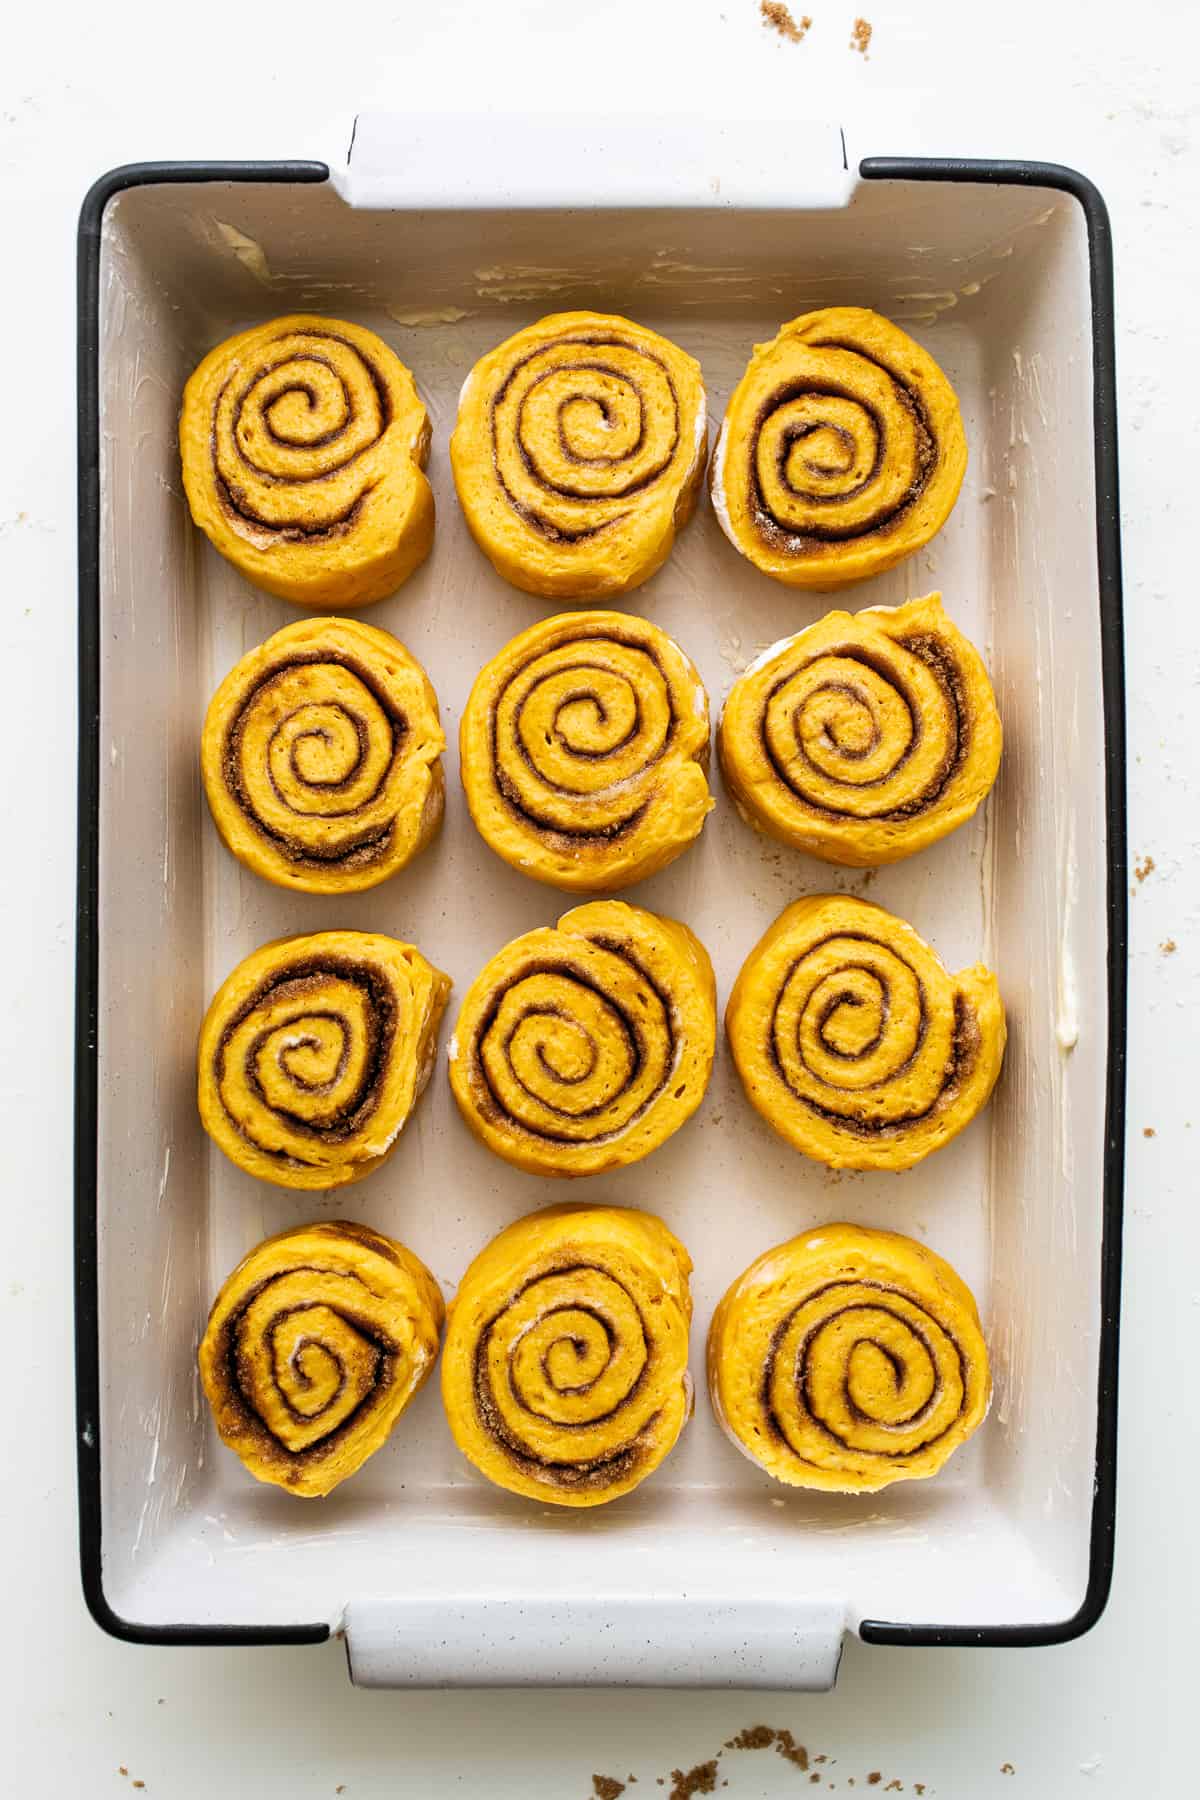 Pumpkin cinnamon rolls in a baking dish.